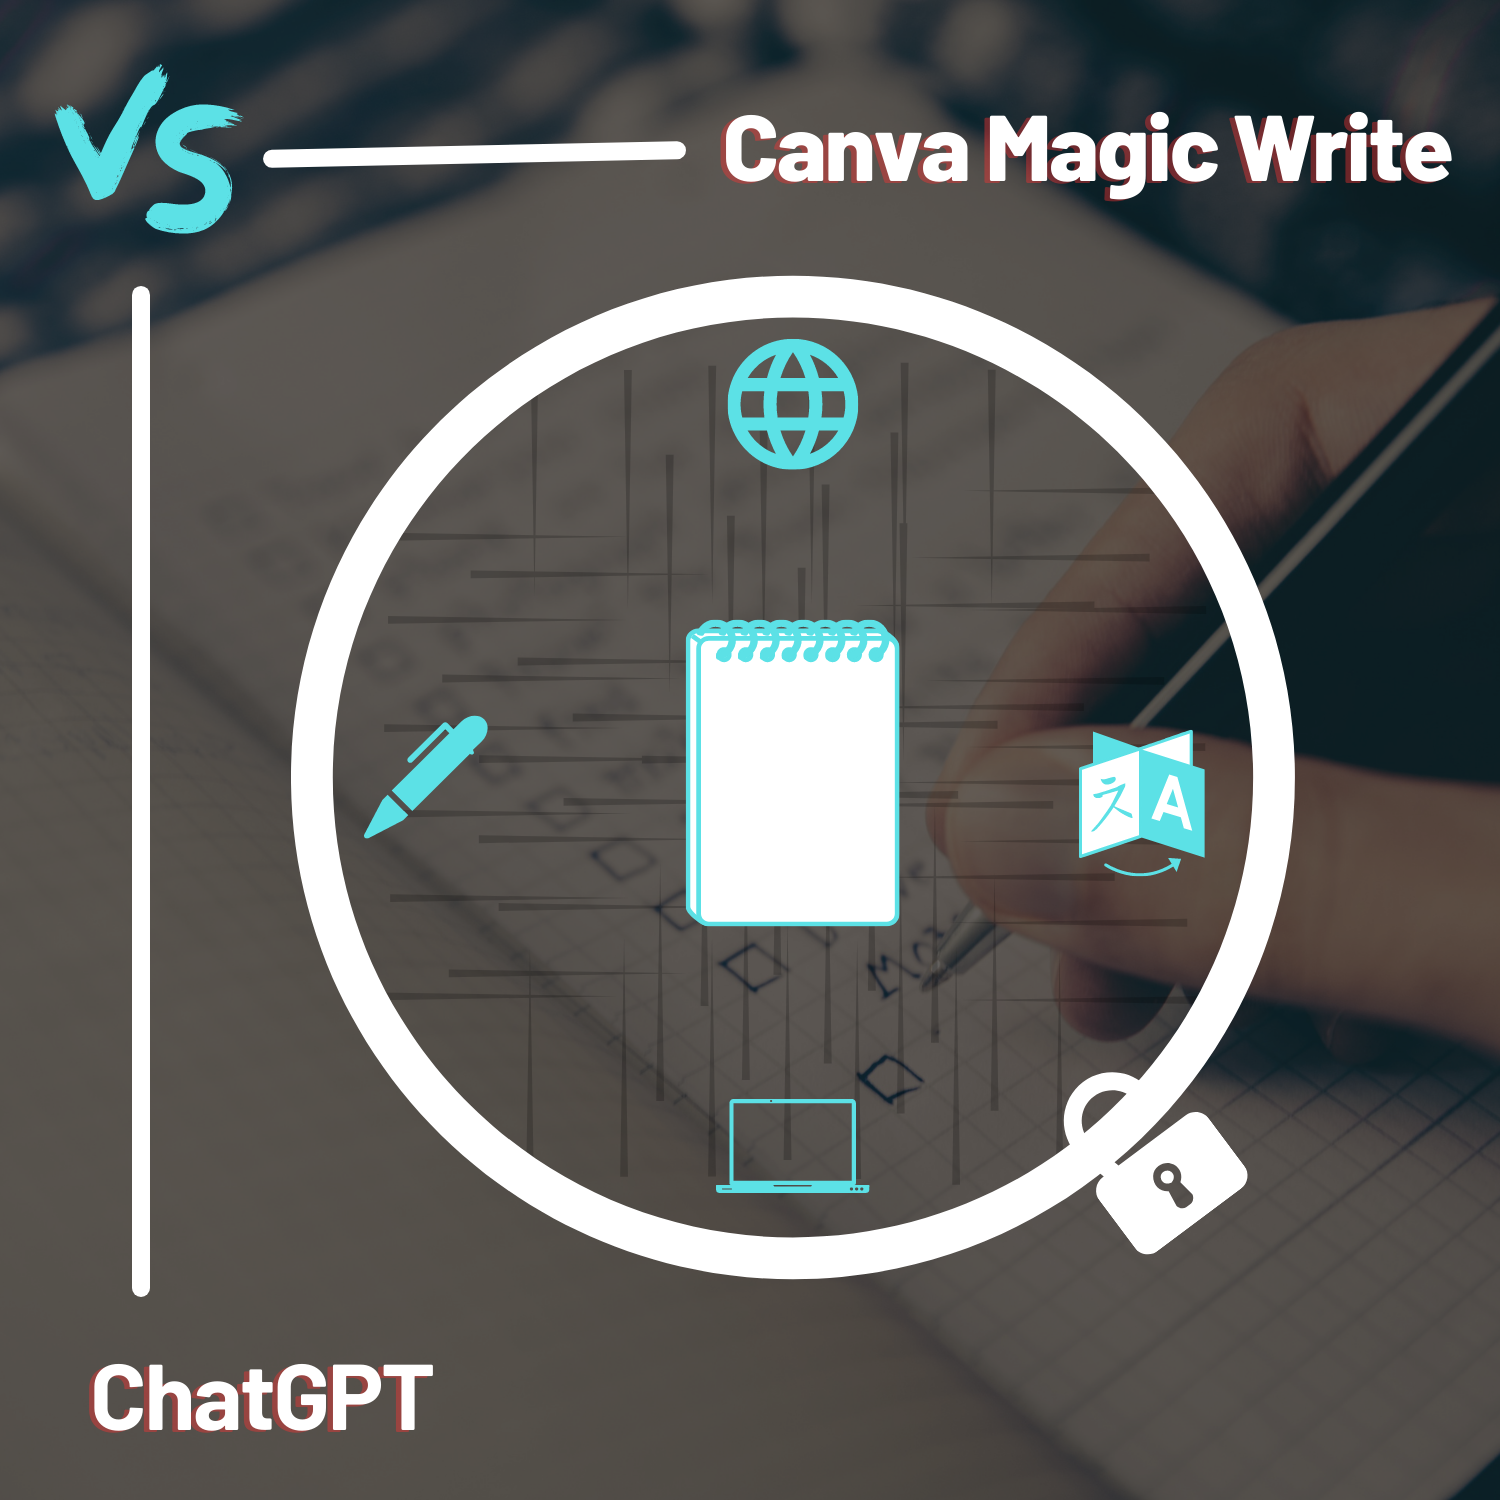 Canva Magic Write vs ChatGPT